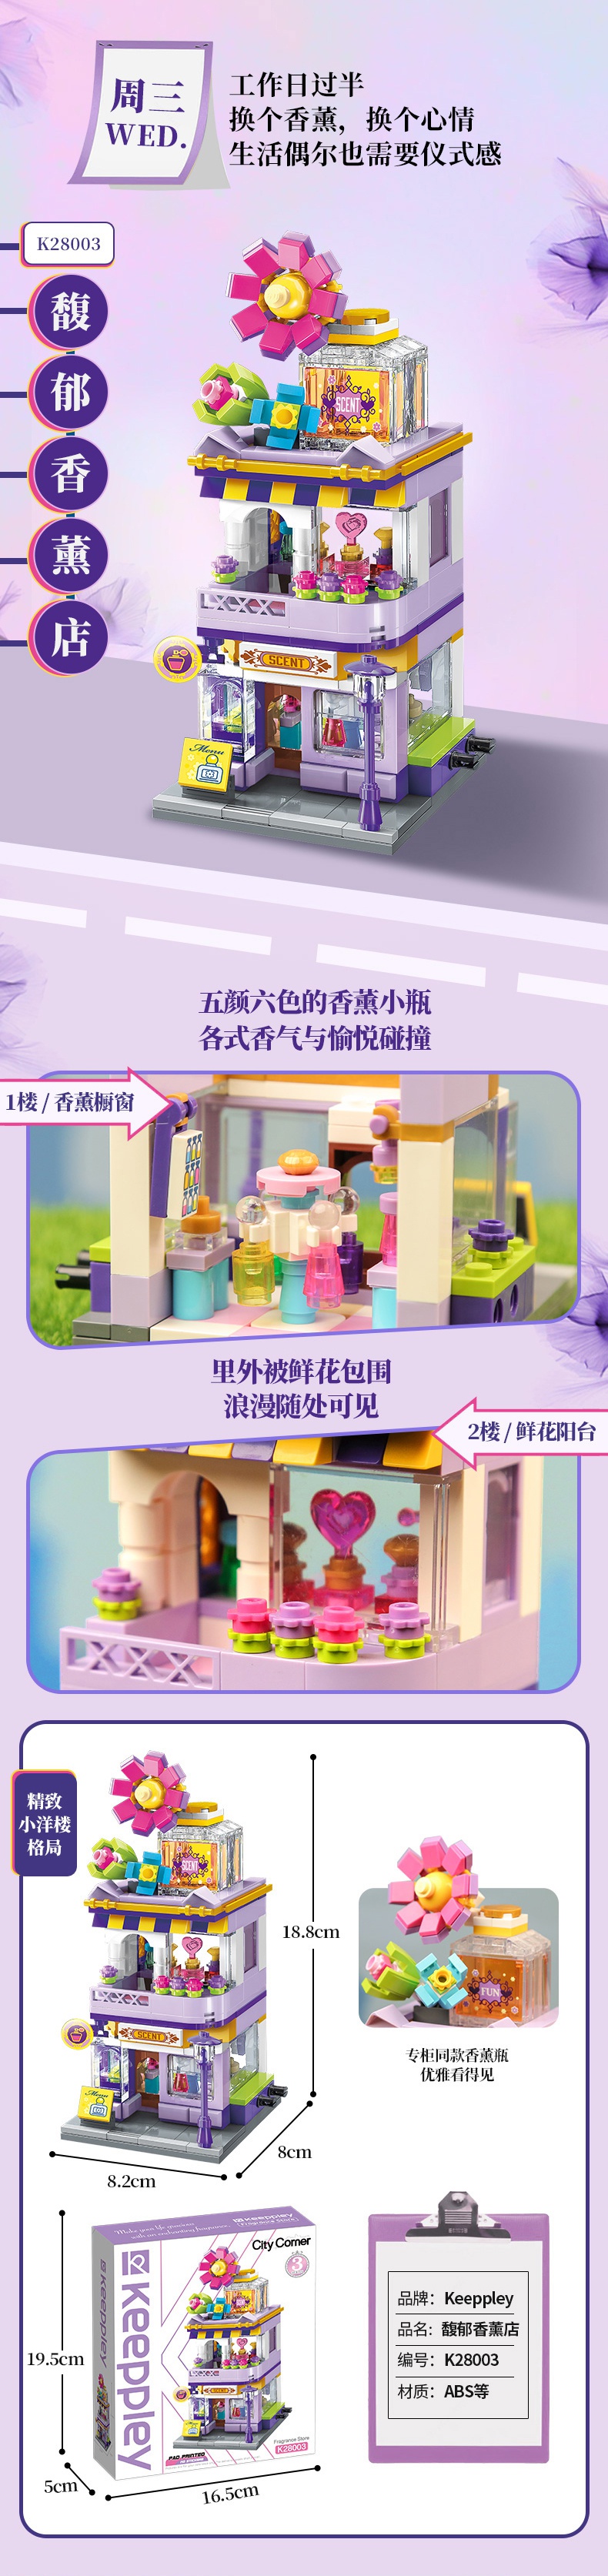 Keeppley K28003 Colorful Street Scene Series Fuyu Aromatherapy Shop Building Blocks Toy Set